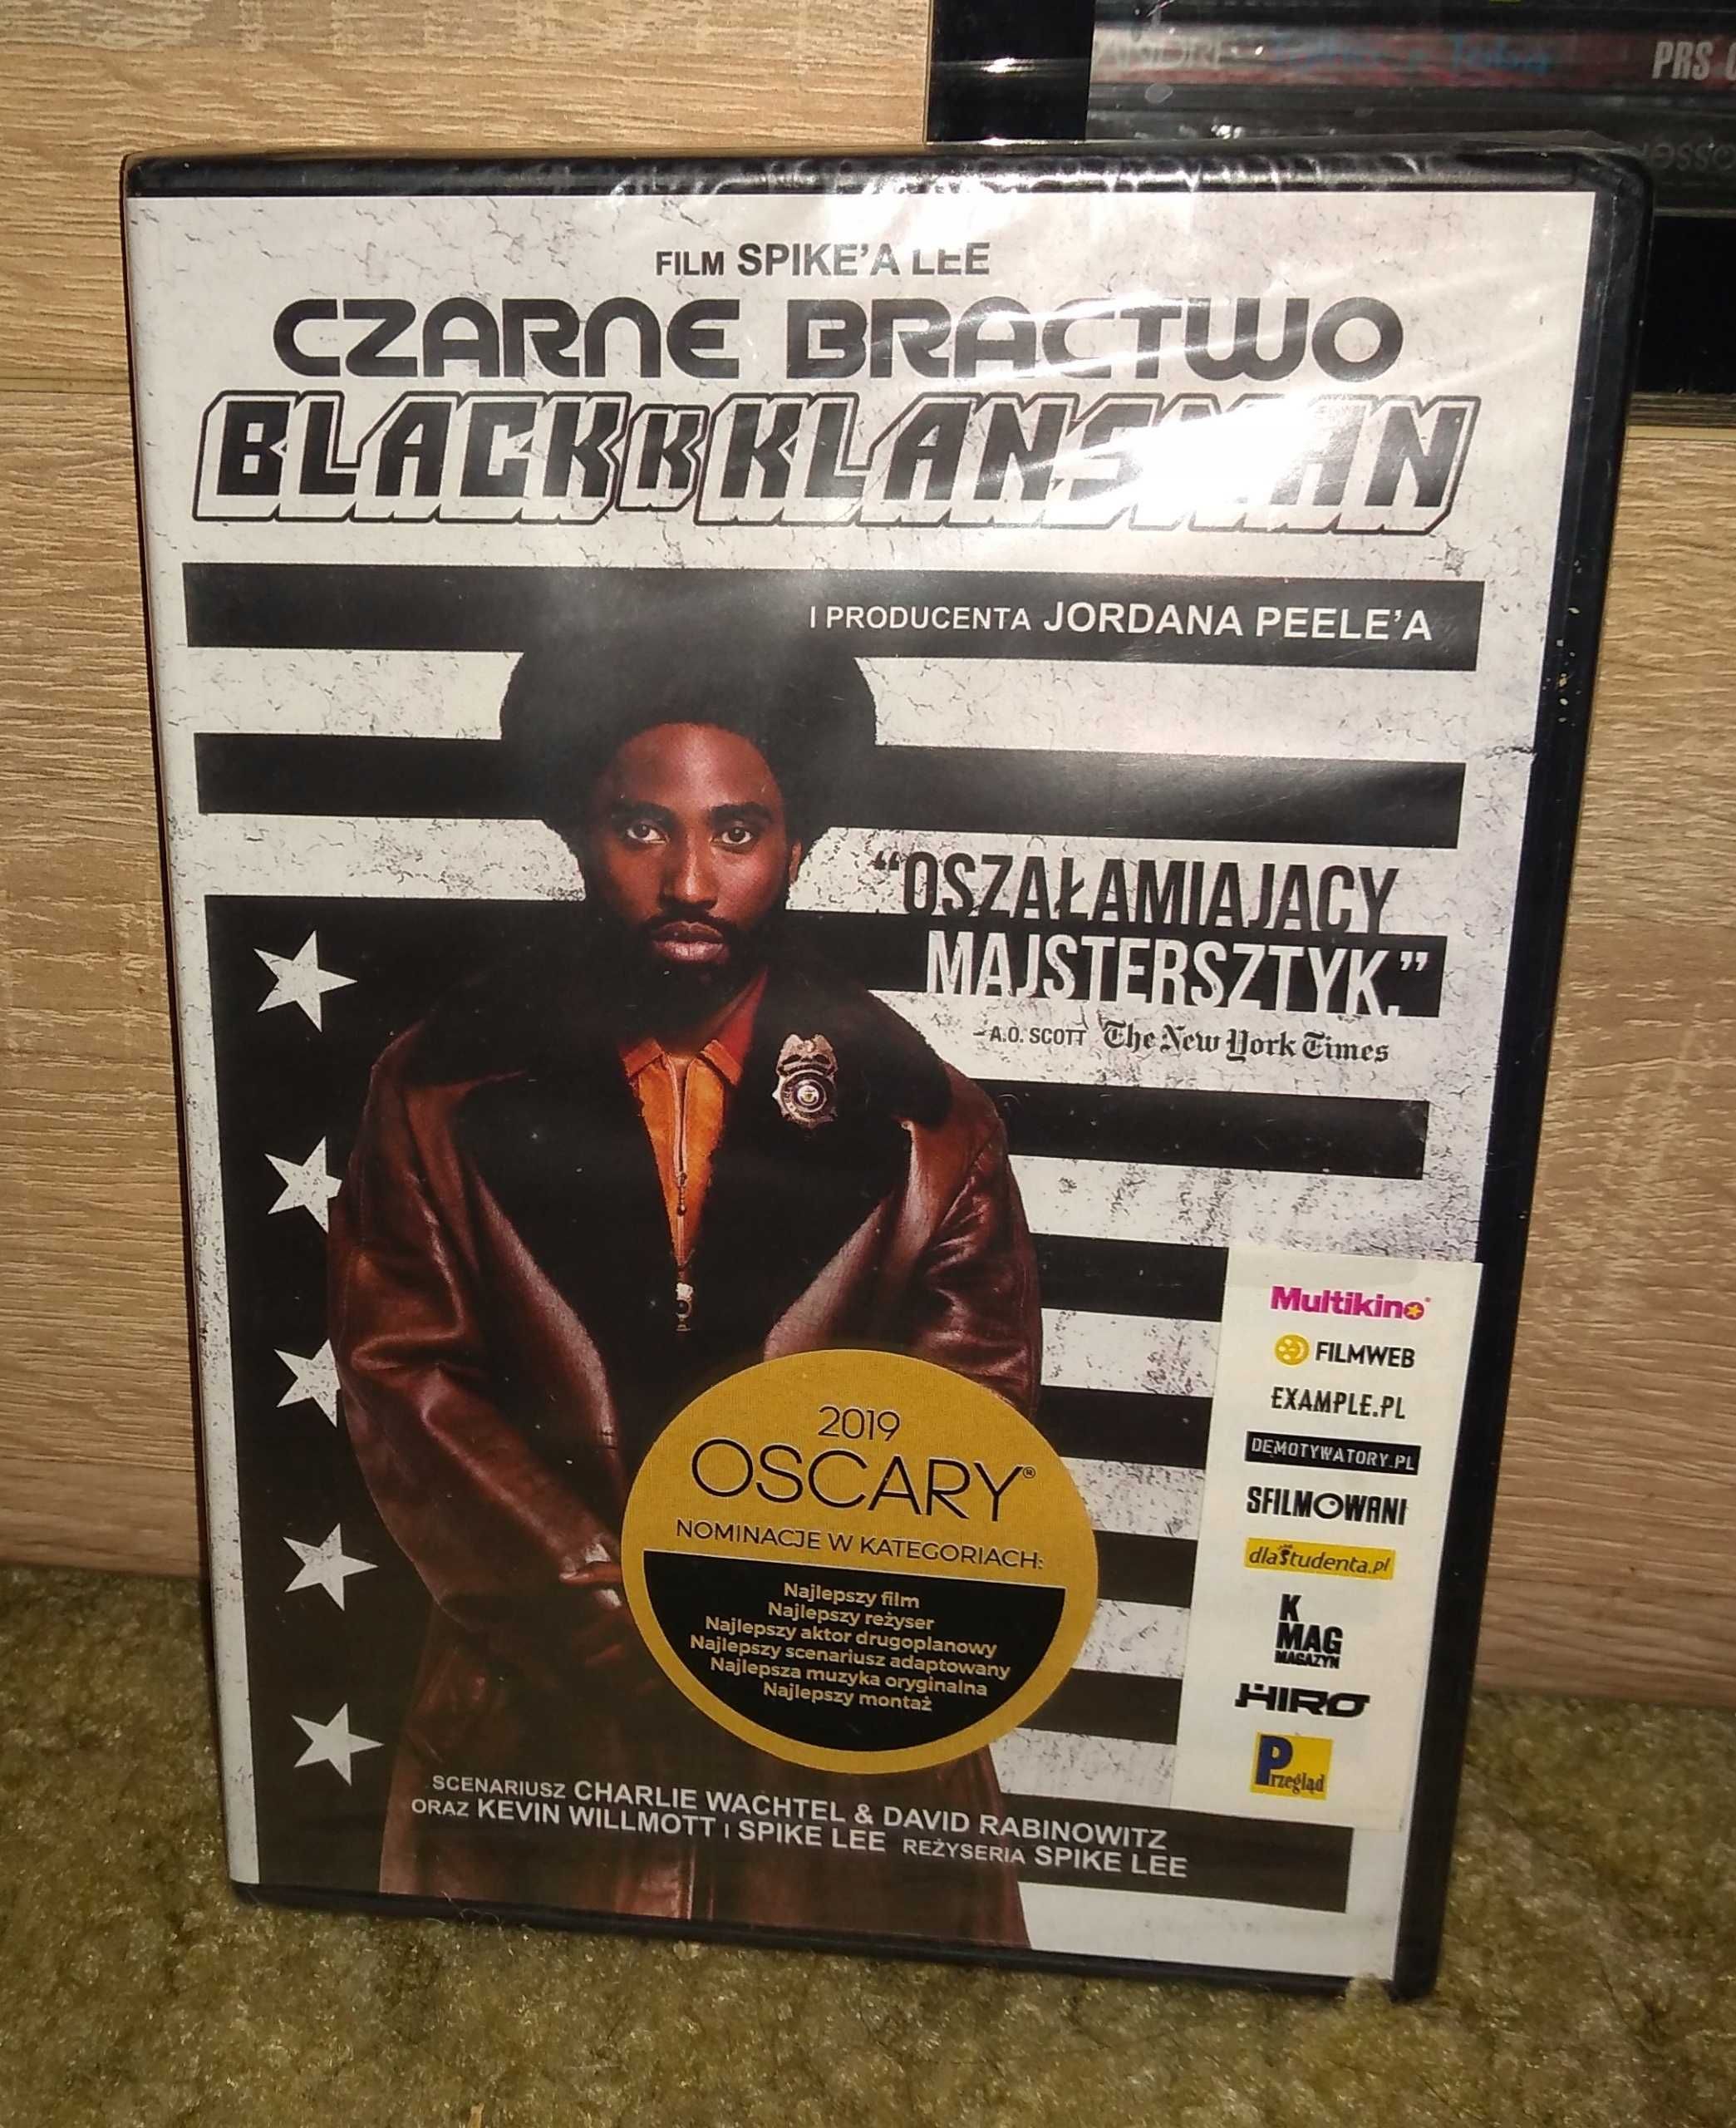 Czarne bractwo BLACKKKLANSMAN / Folia / DVD / LEKTOR PL